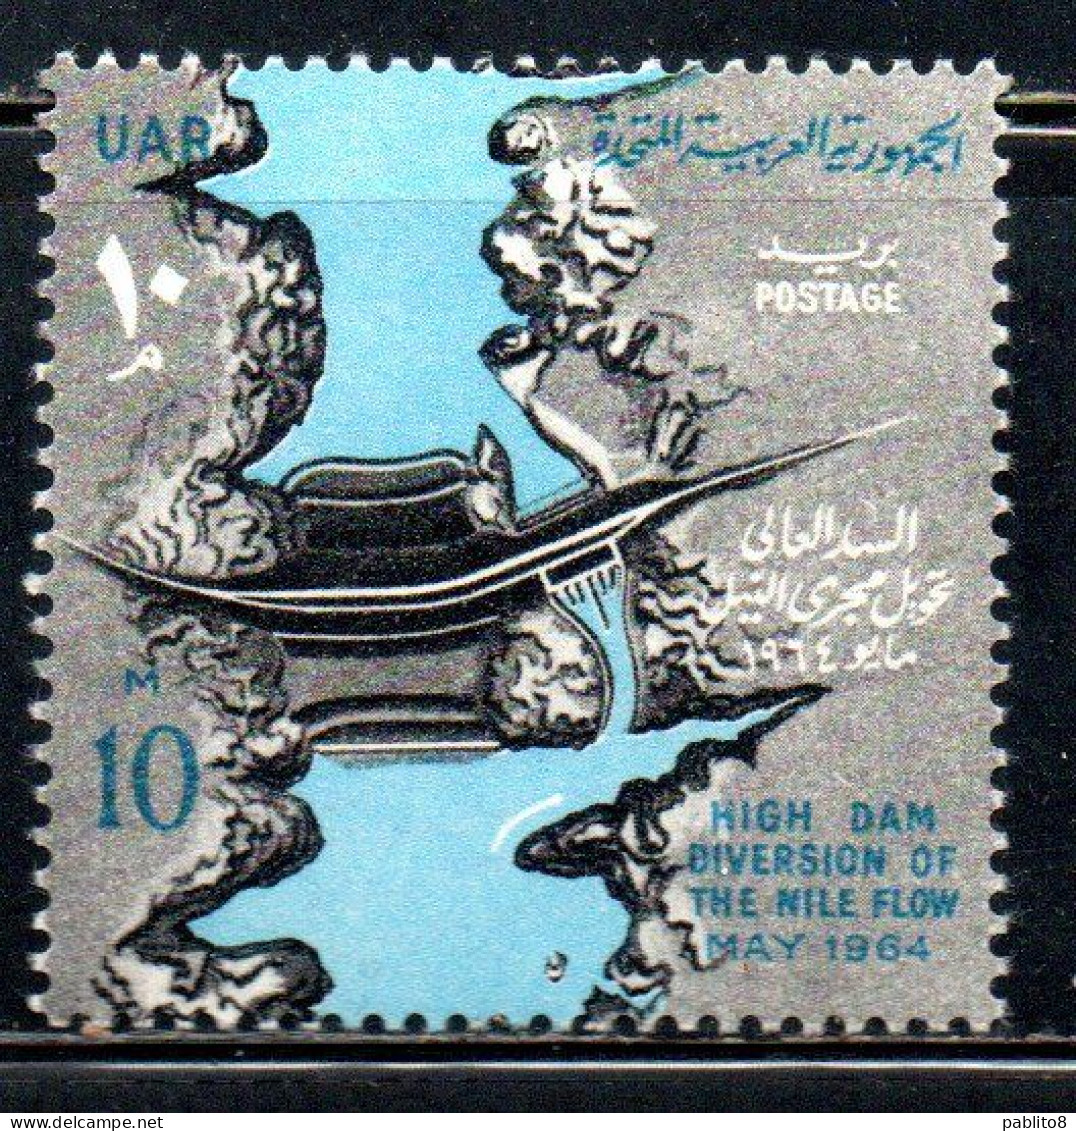 UAR EGYPT EGITTO 1964 THE DIVERSION OF THE NILE ASWAN HIGH DAM 10m  MNH - Unused Stamps